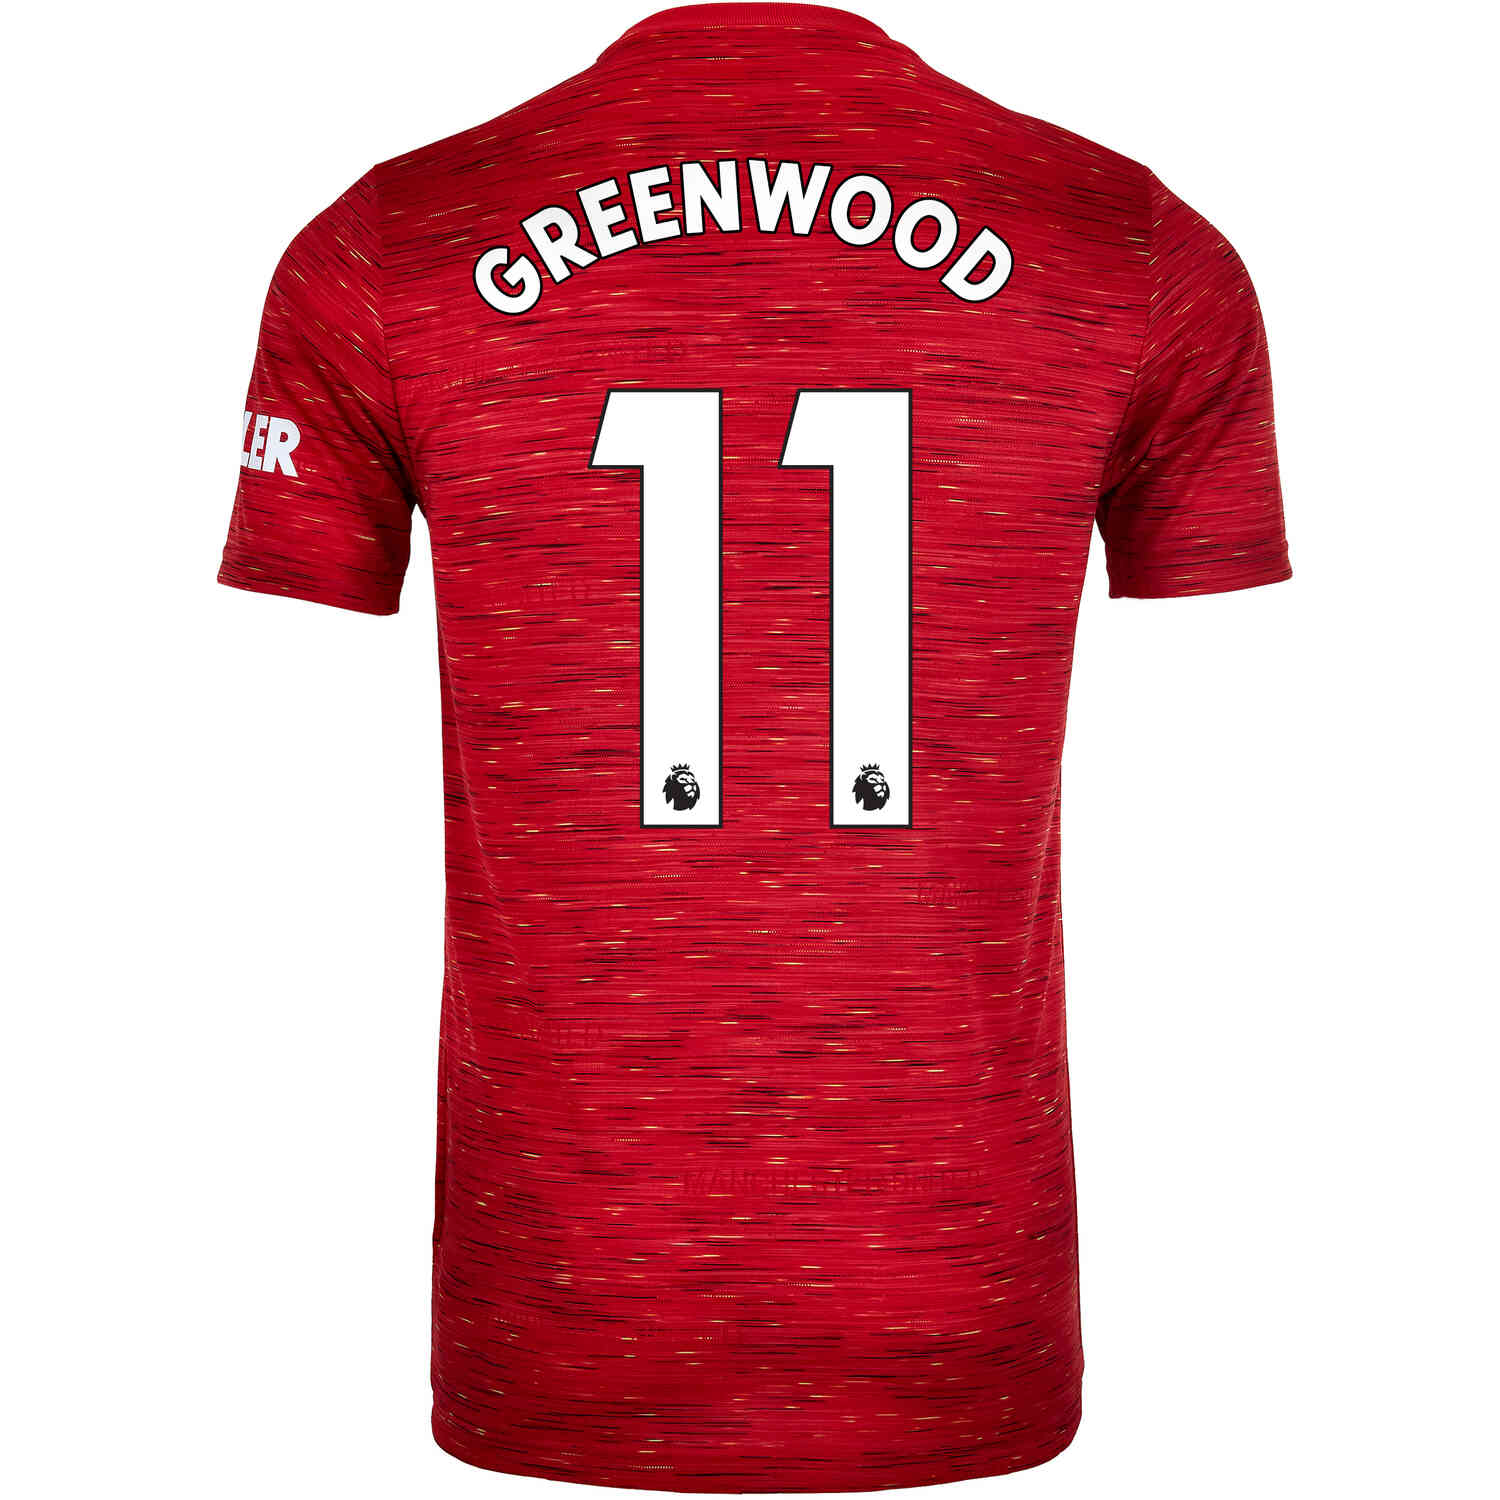 greenwood jersey number